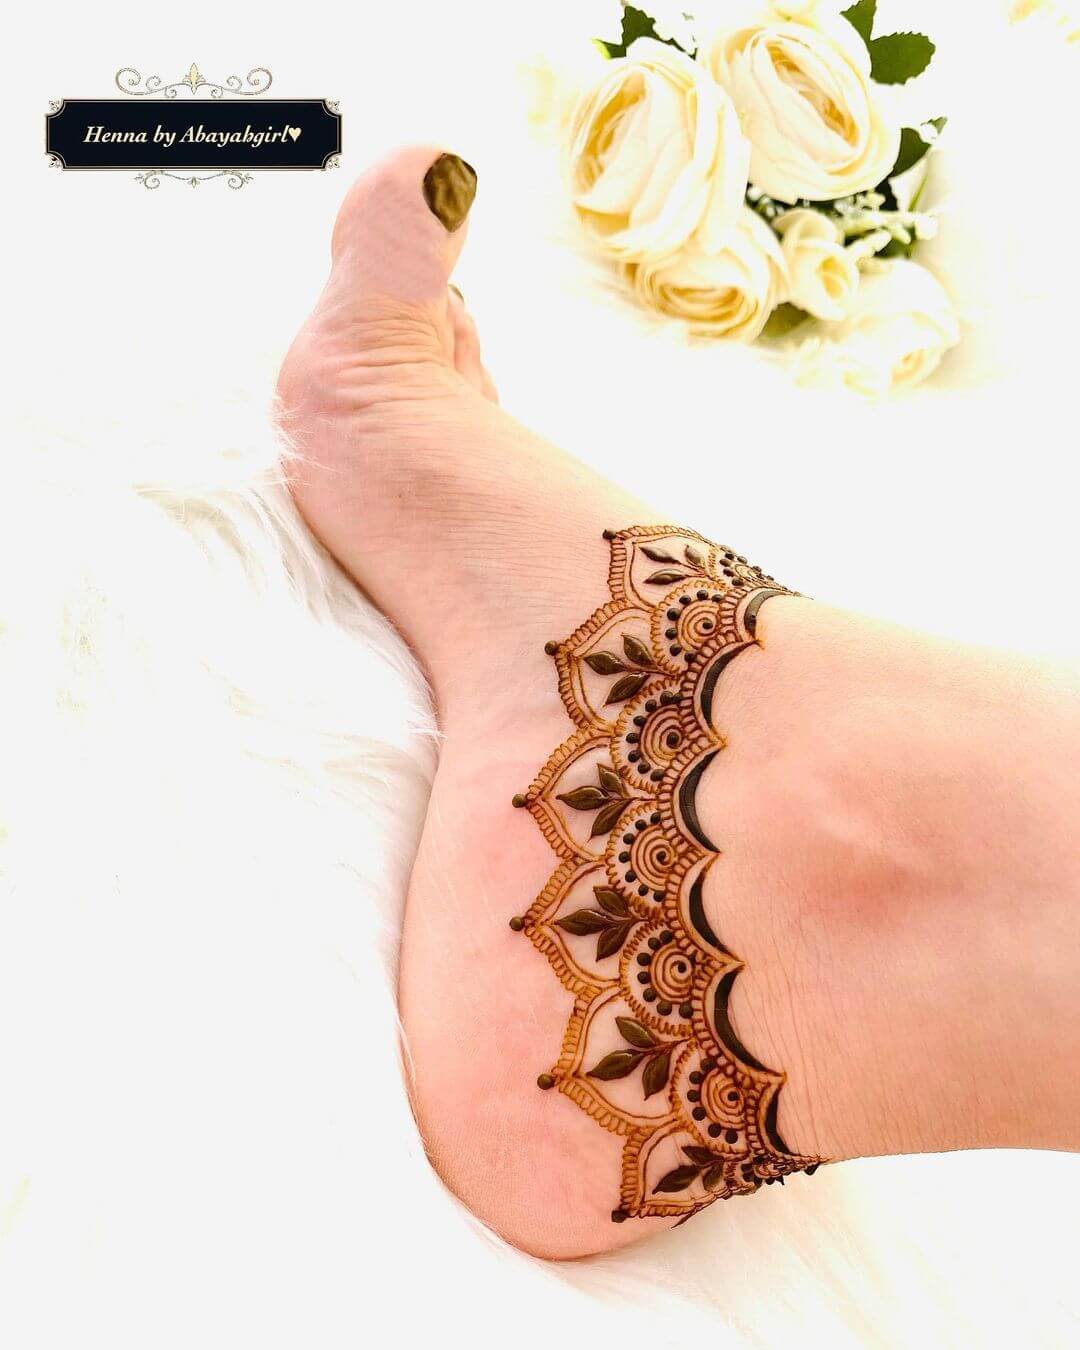 Elegant Henna Tattoo Designs for Feet Henna Design On The Feet